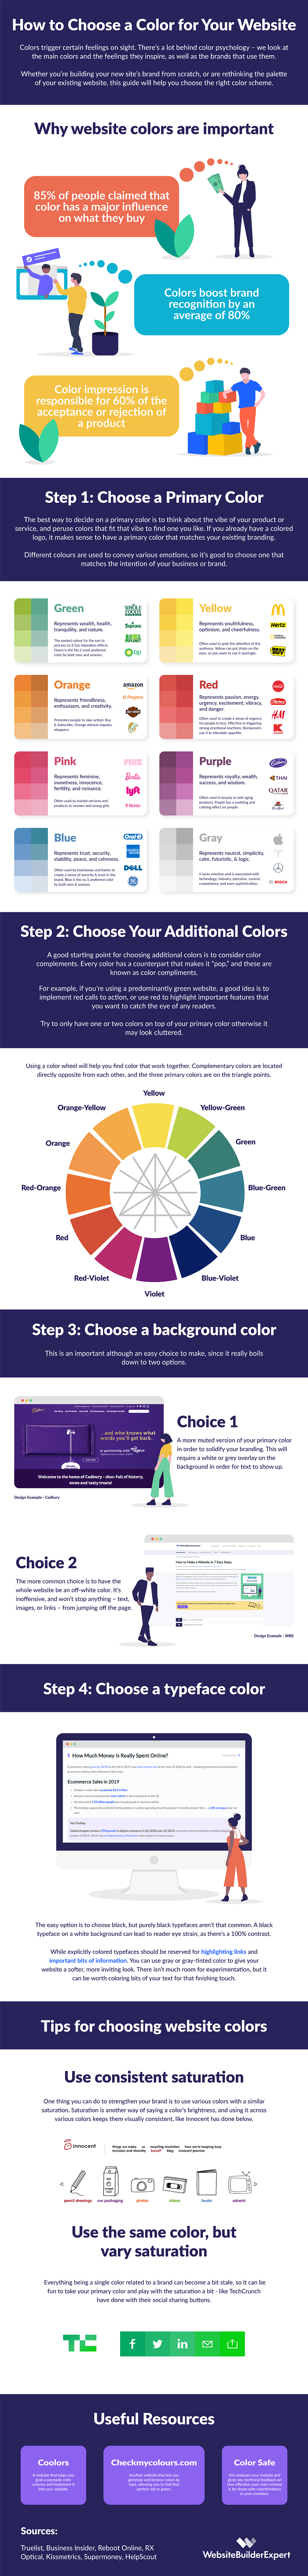 Website color guide